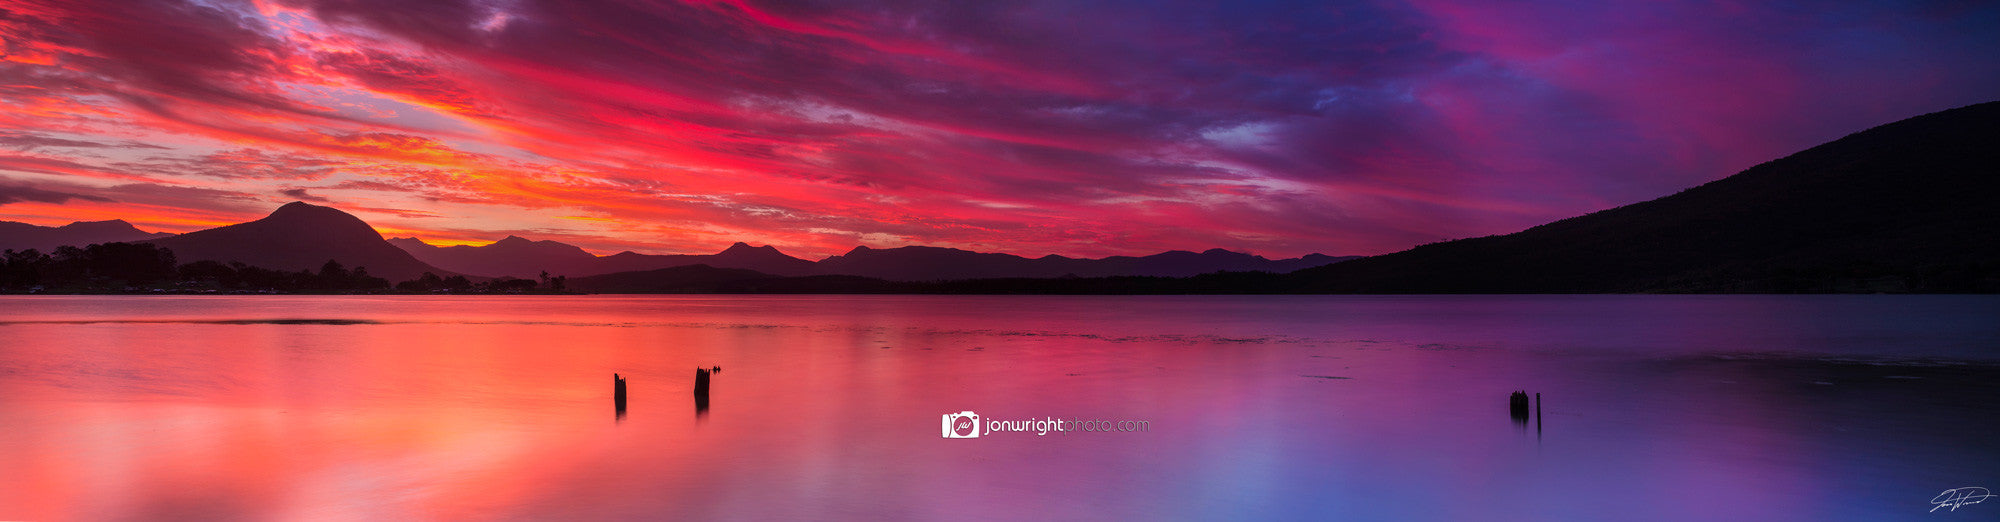 Lake Moogerah Sunset 2013